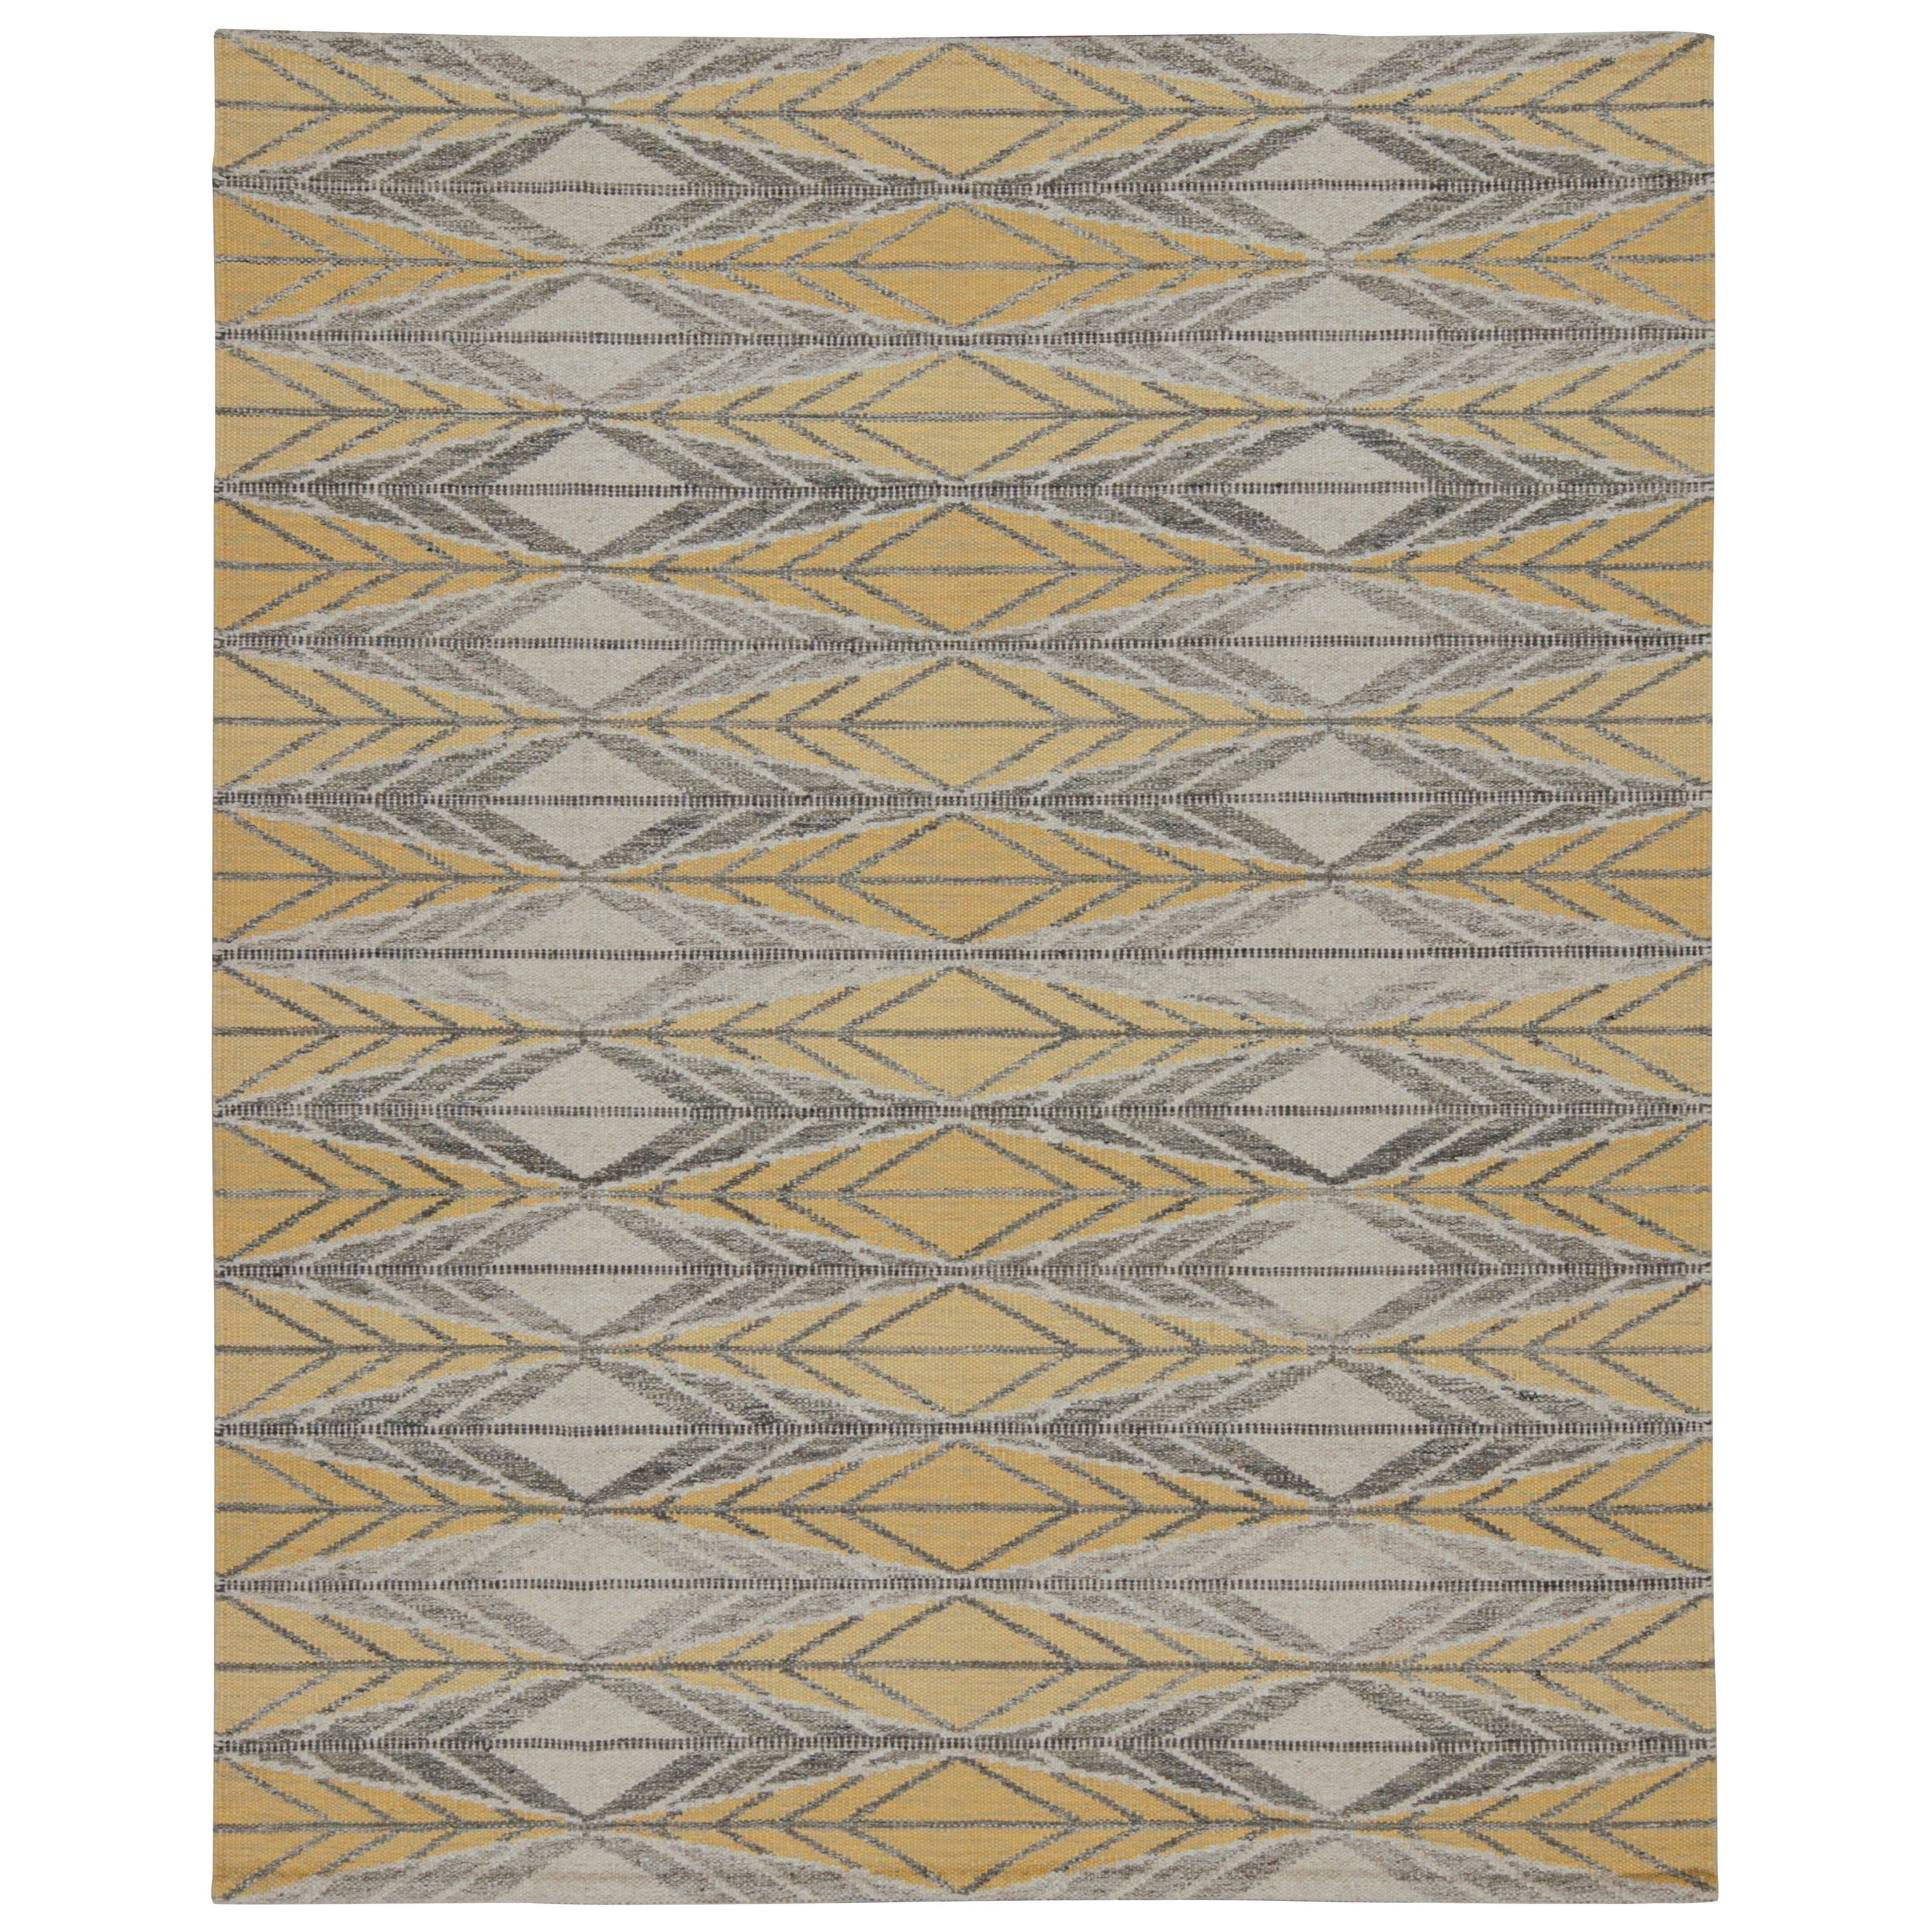 Rug & Kilim’s Scandinavian Style Custom Kilim in Gold & Gray Geometric Patterns